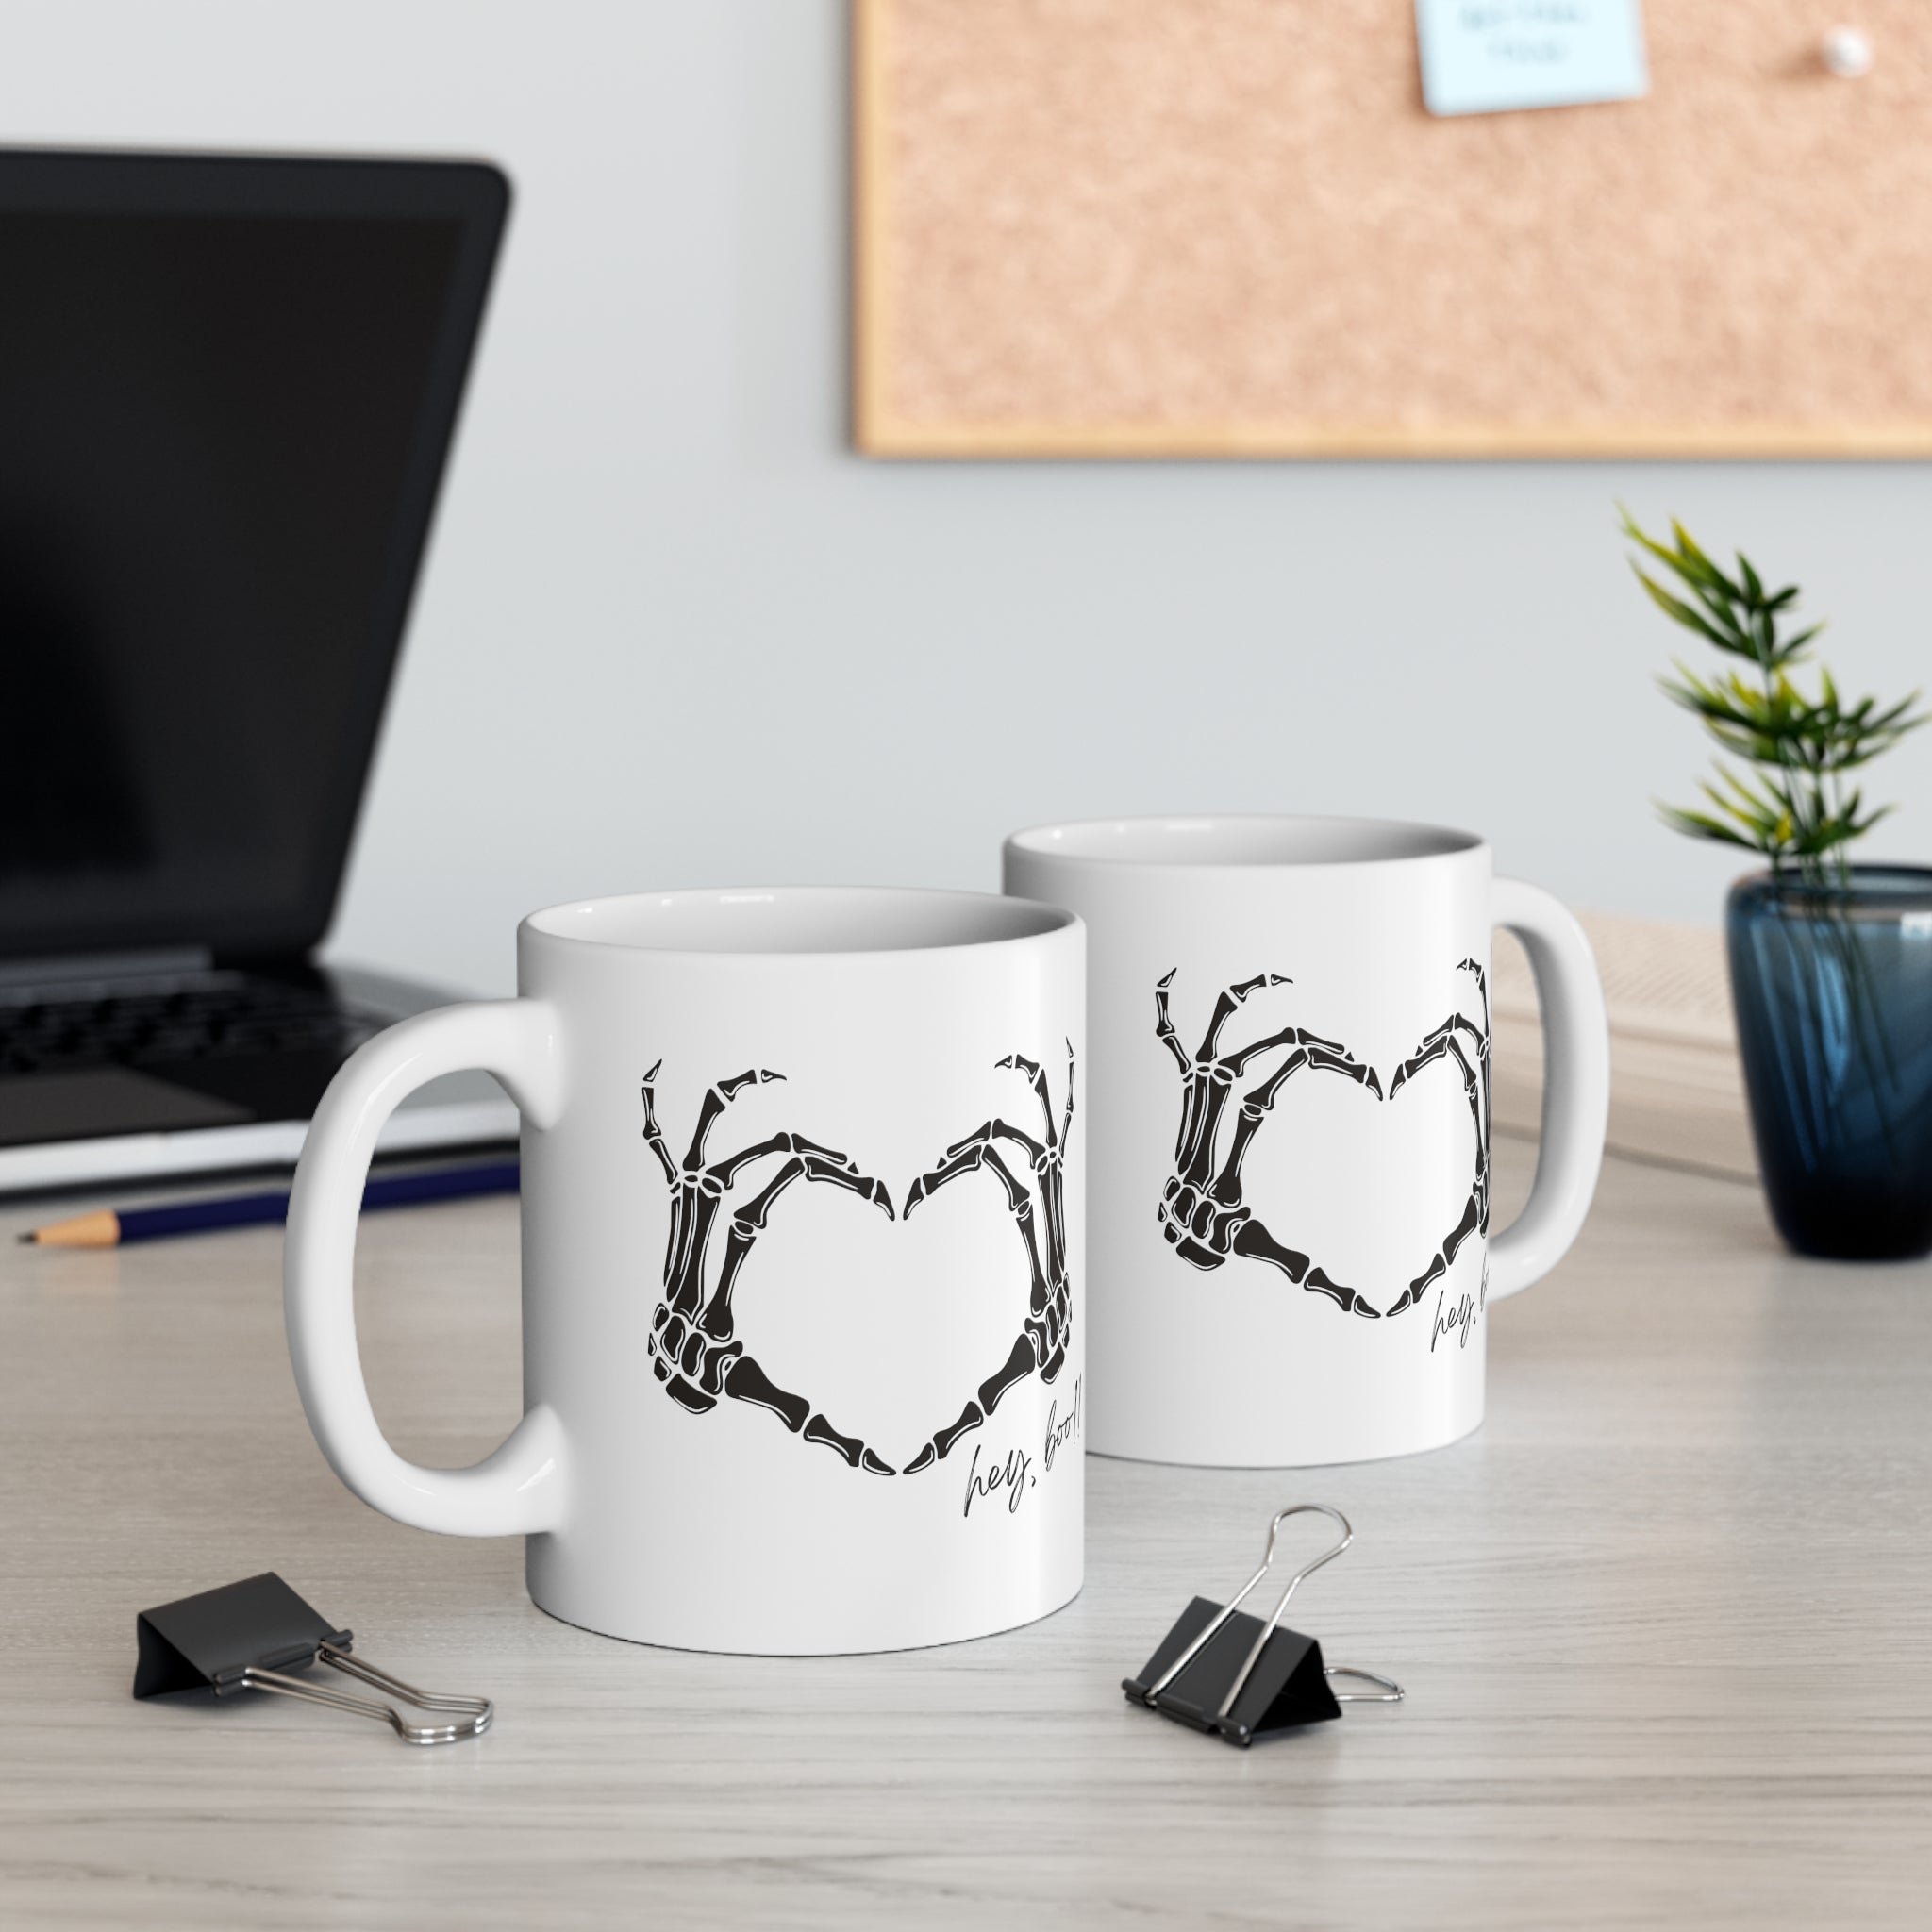 Hey Boo! | Coffee Mug